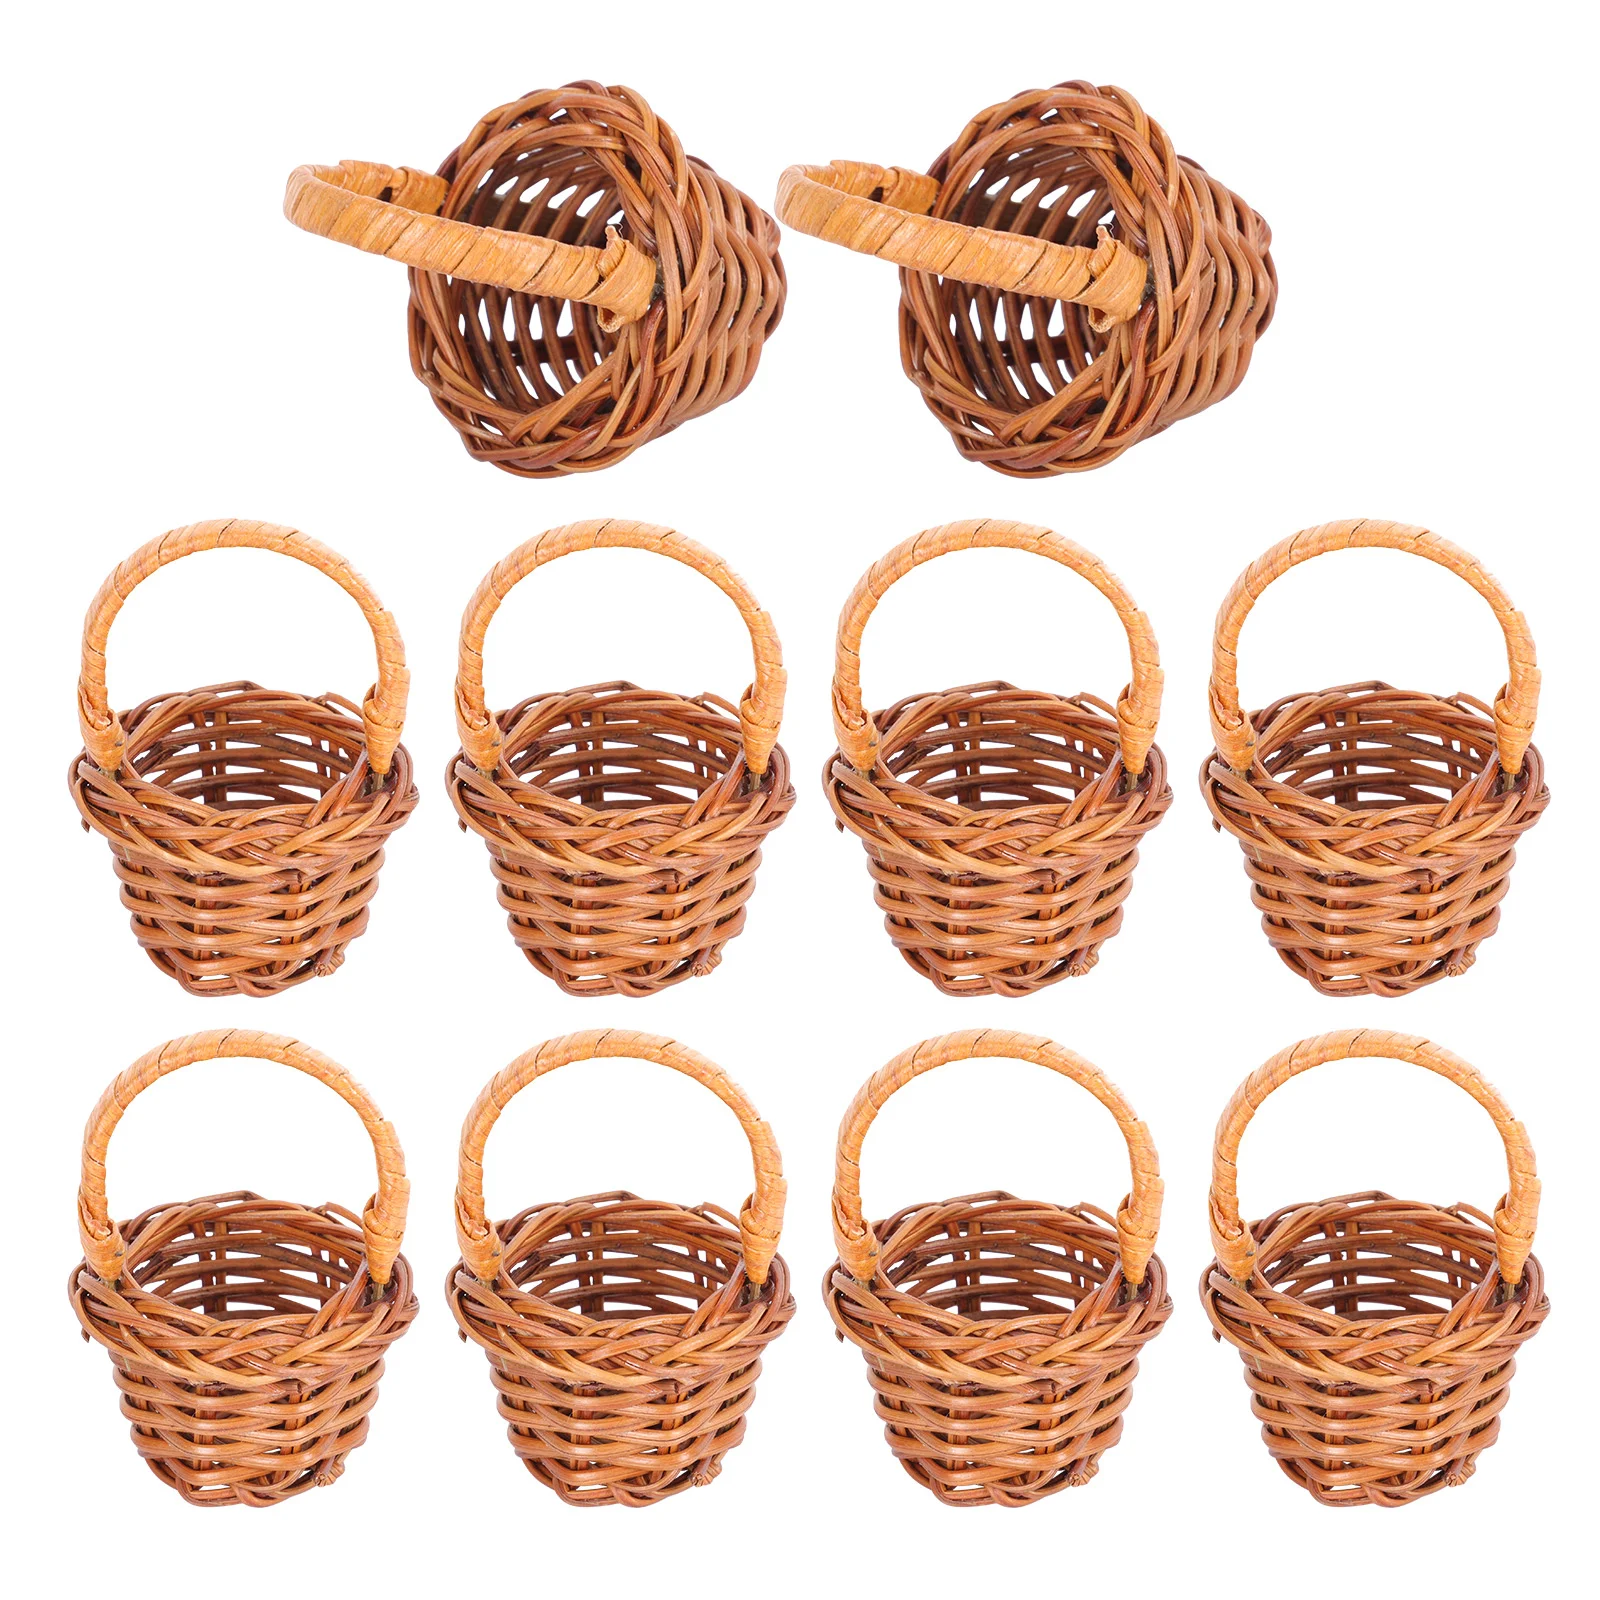 

Basket Baskets Mini Wicker Woven Picnic Rattan Flowerminiature Small Fruitparty Wedding Willow Storage Favor Candy Hamper Bread